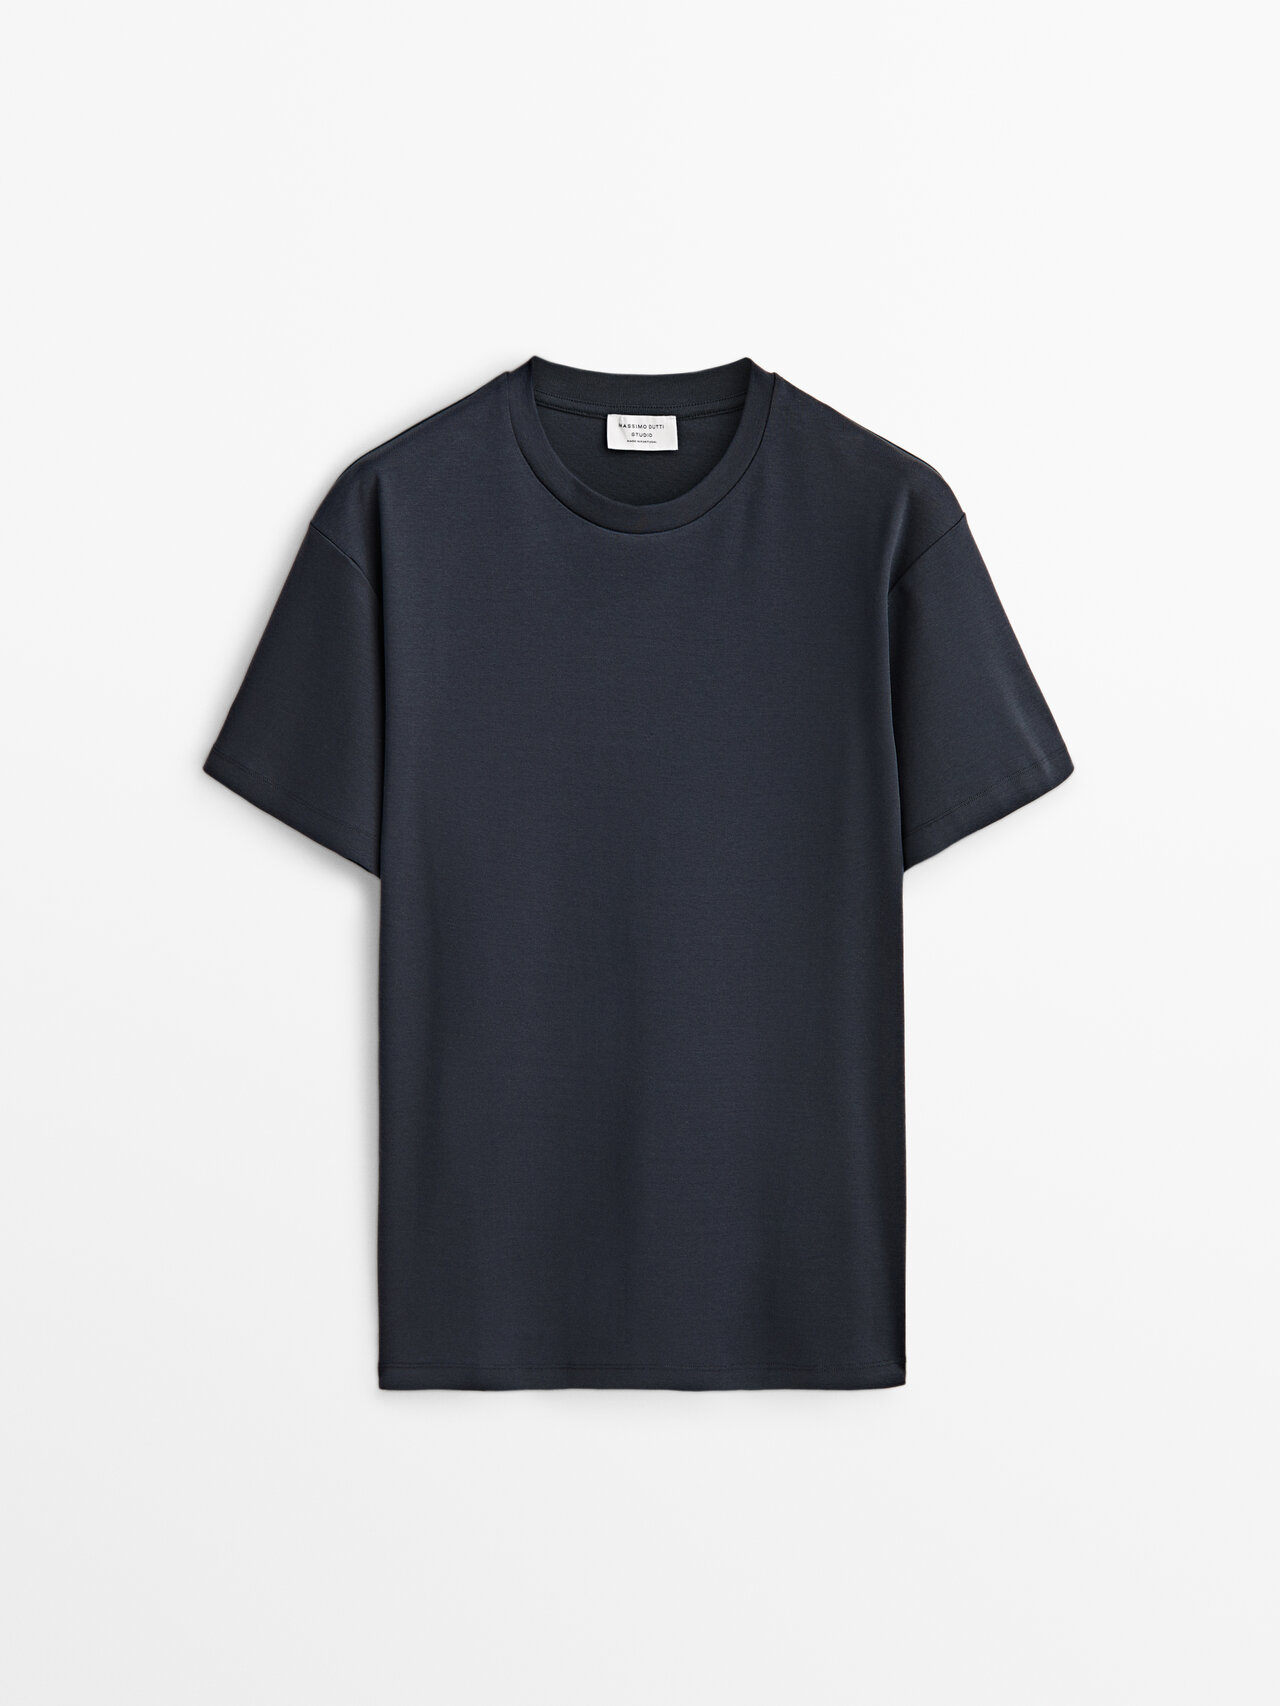 Massimo Dutti Relaxed Fit Short Sleeve Cotton T-shirt - Studio In Kräftiges Blau